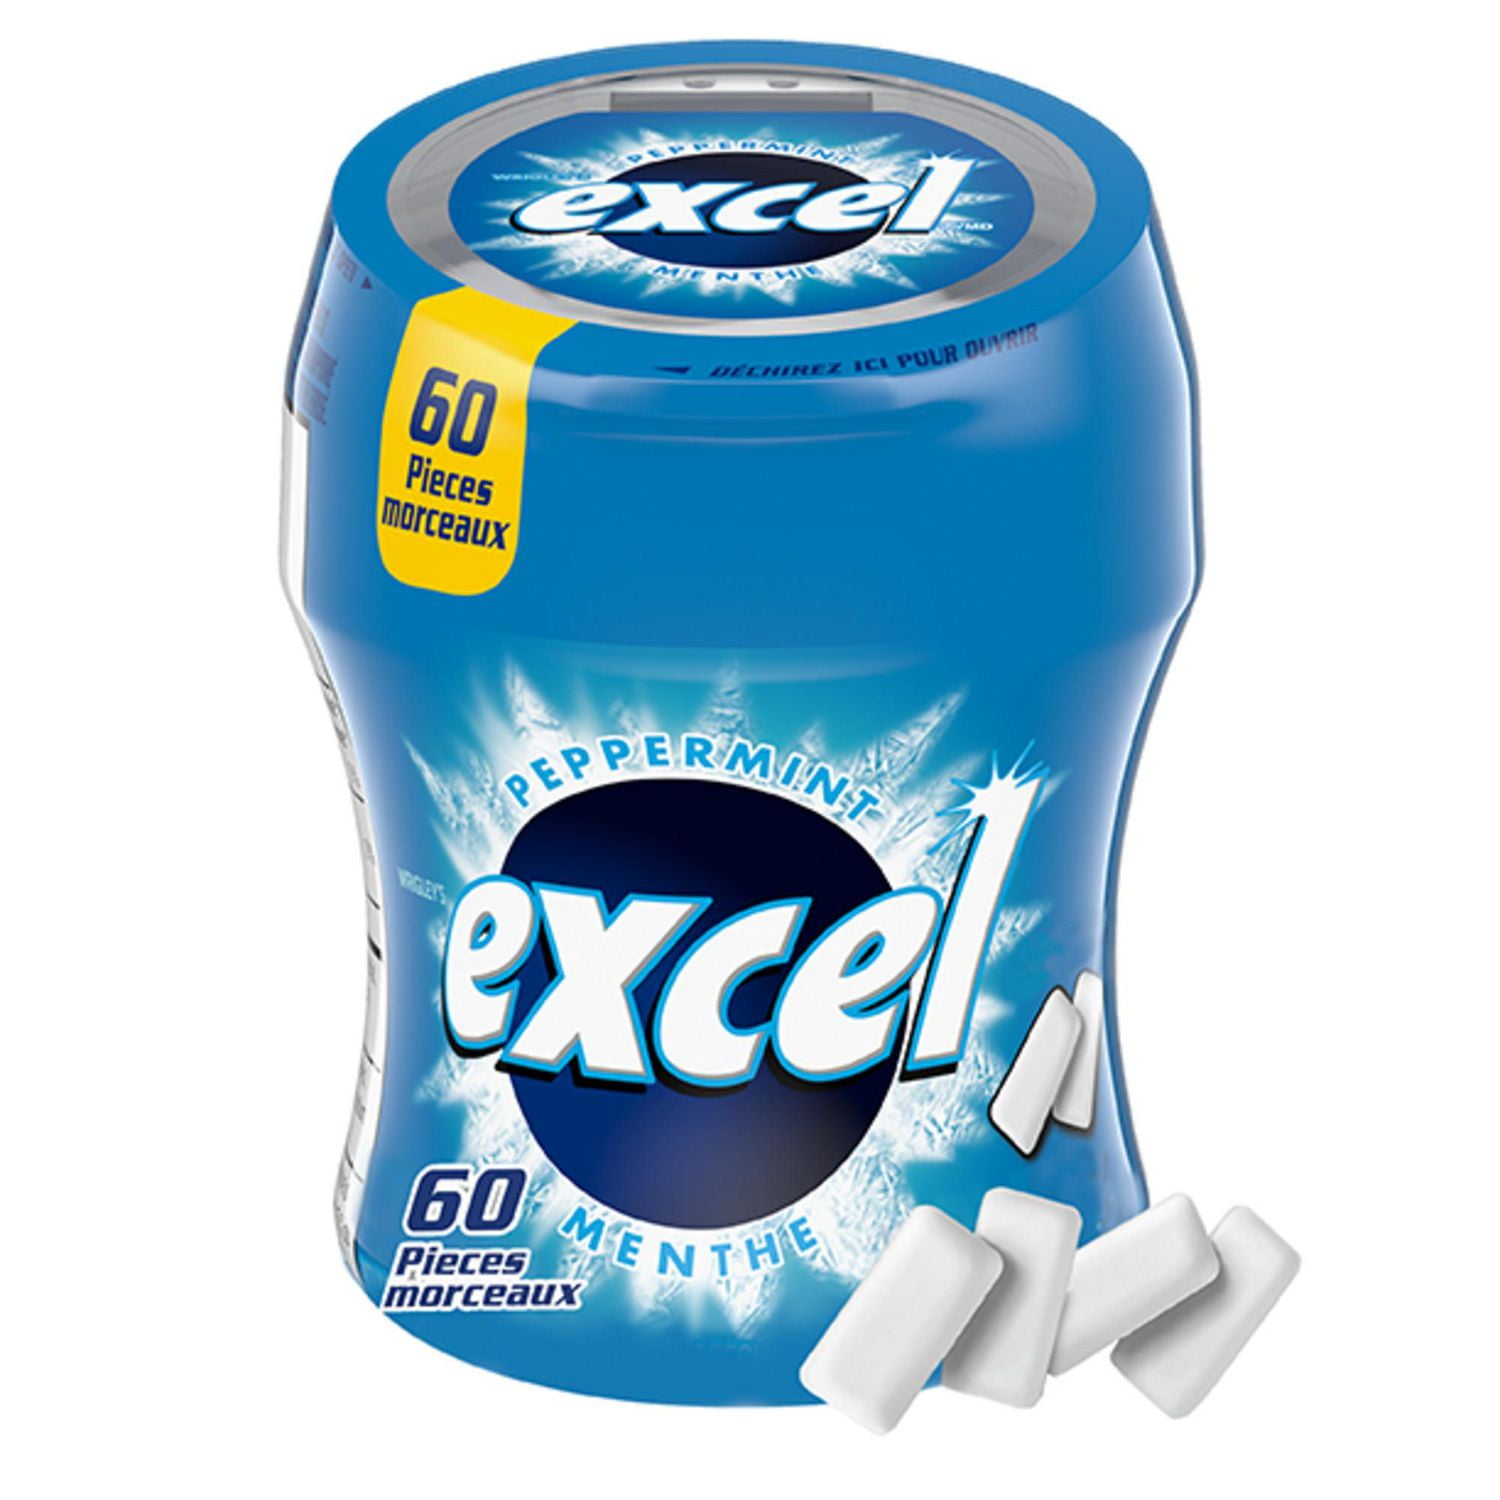 EXTRA Soft Chew Sugar-free Gum